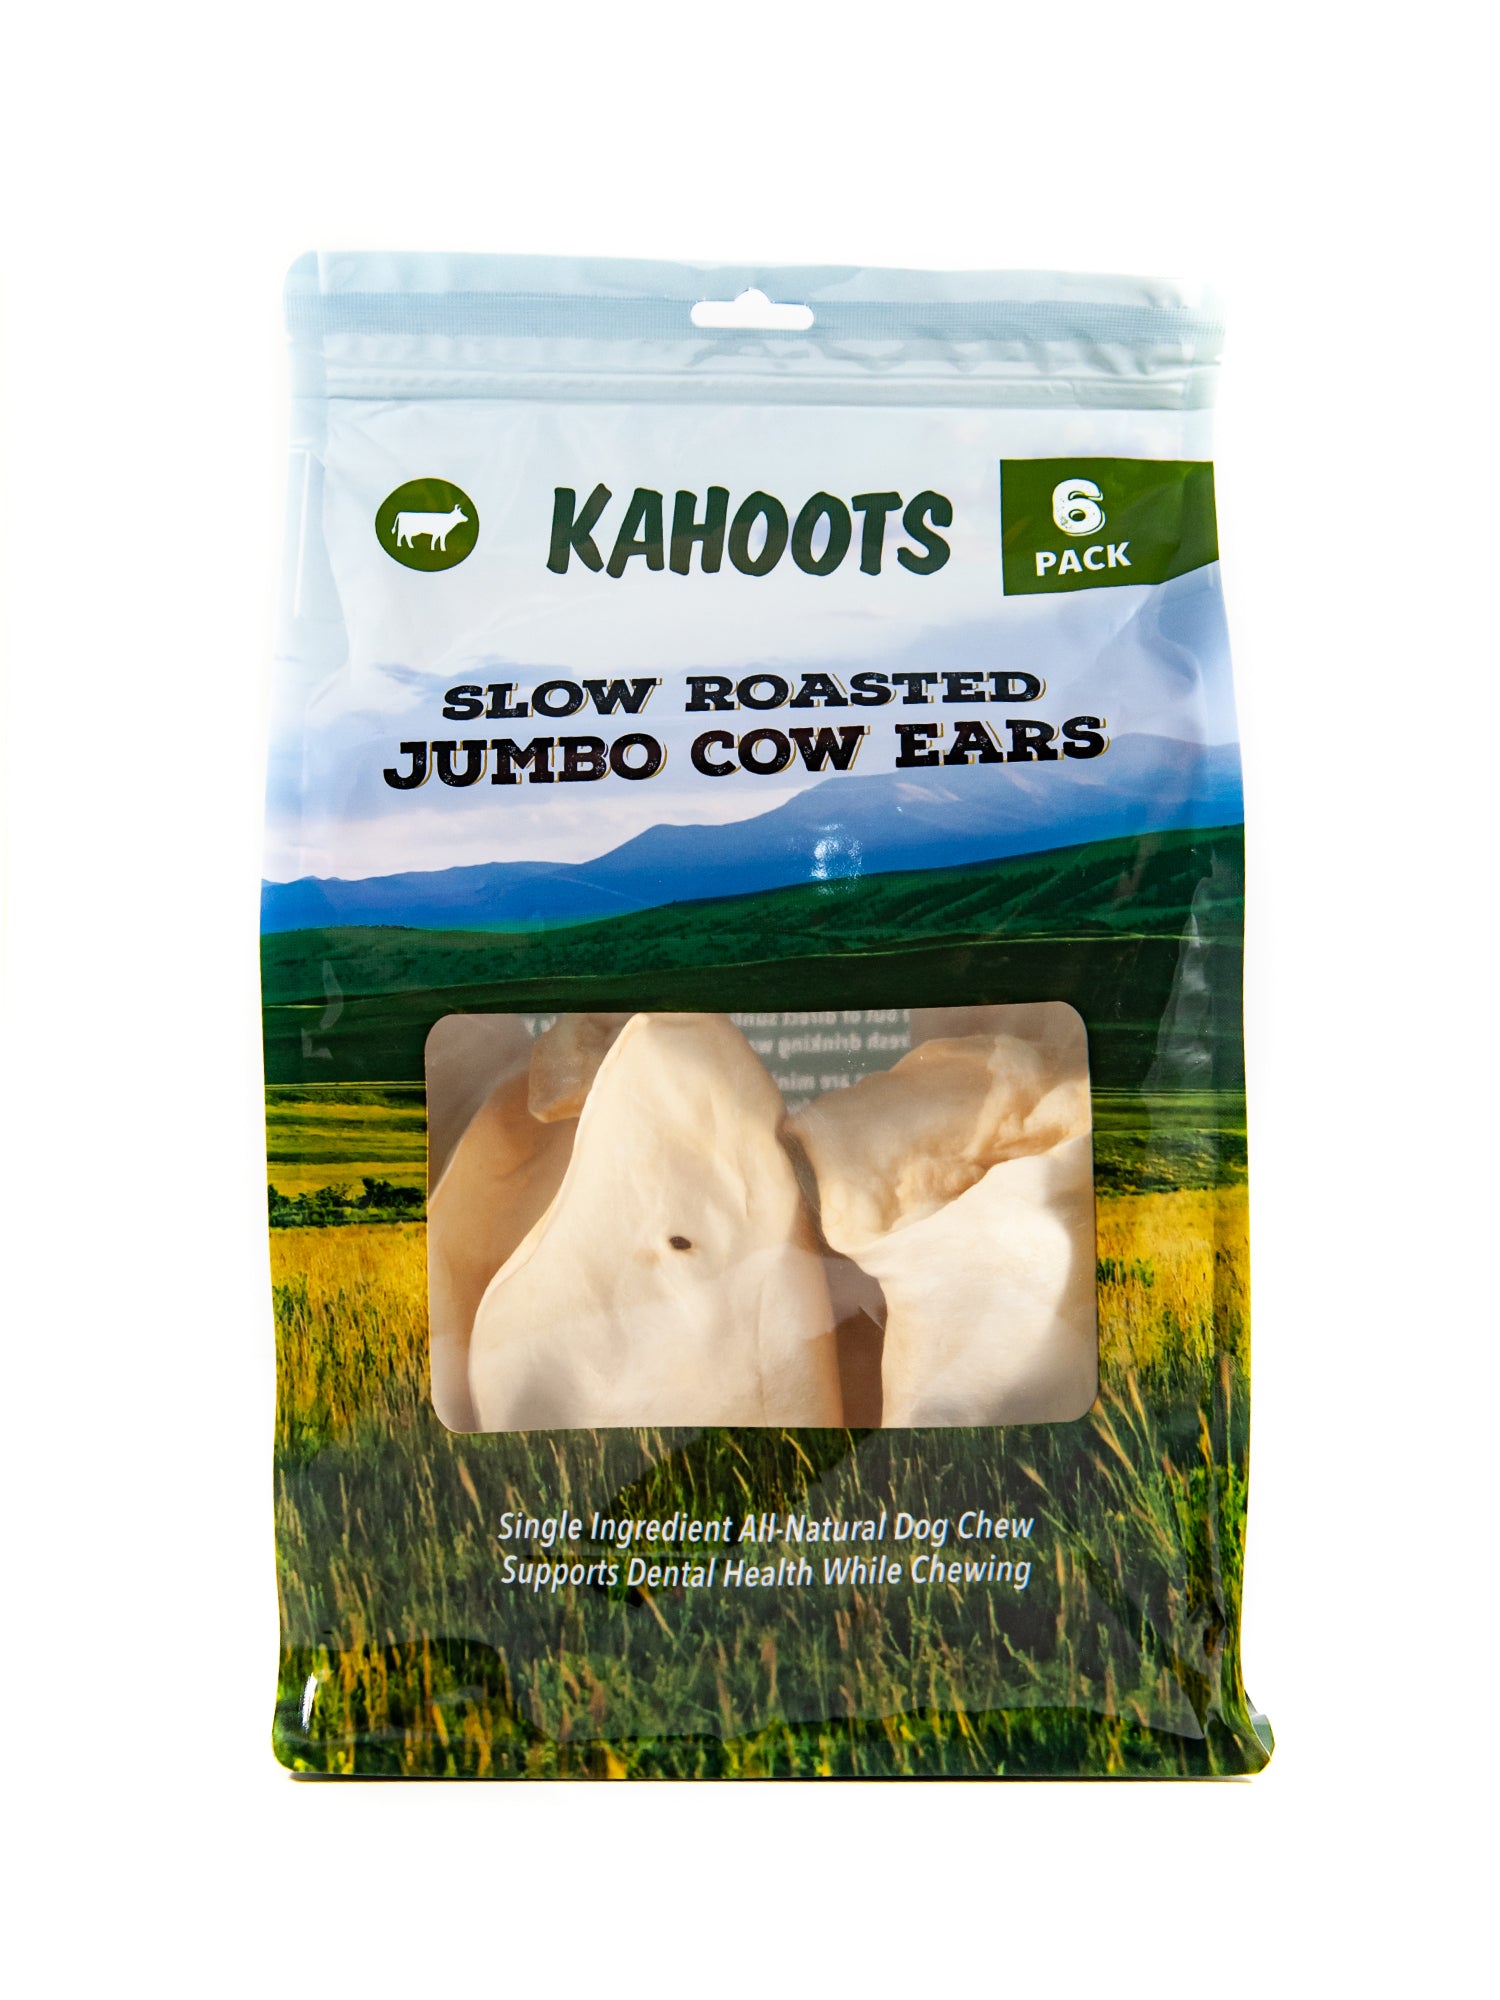 6 jumbo cow ears in a bag